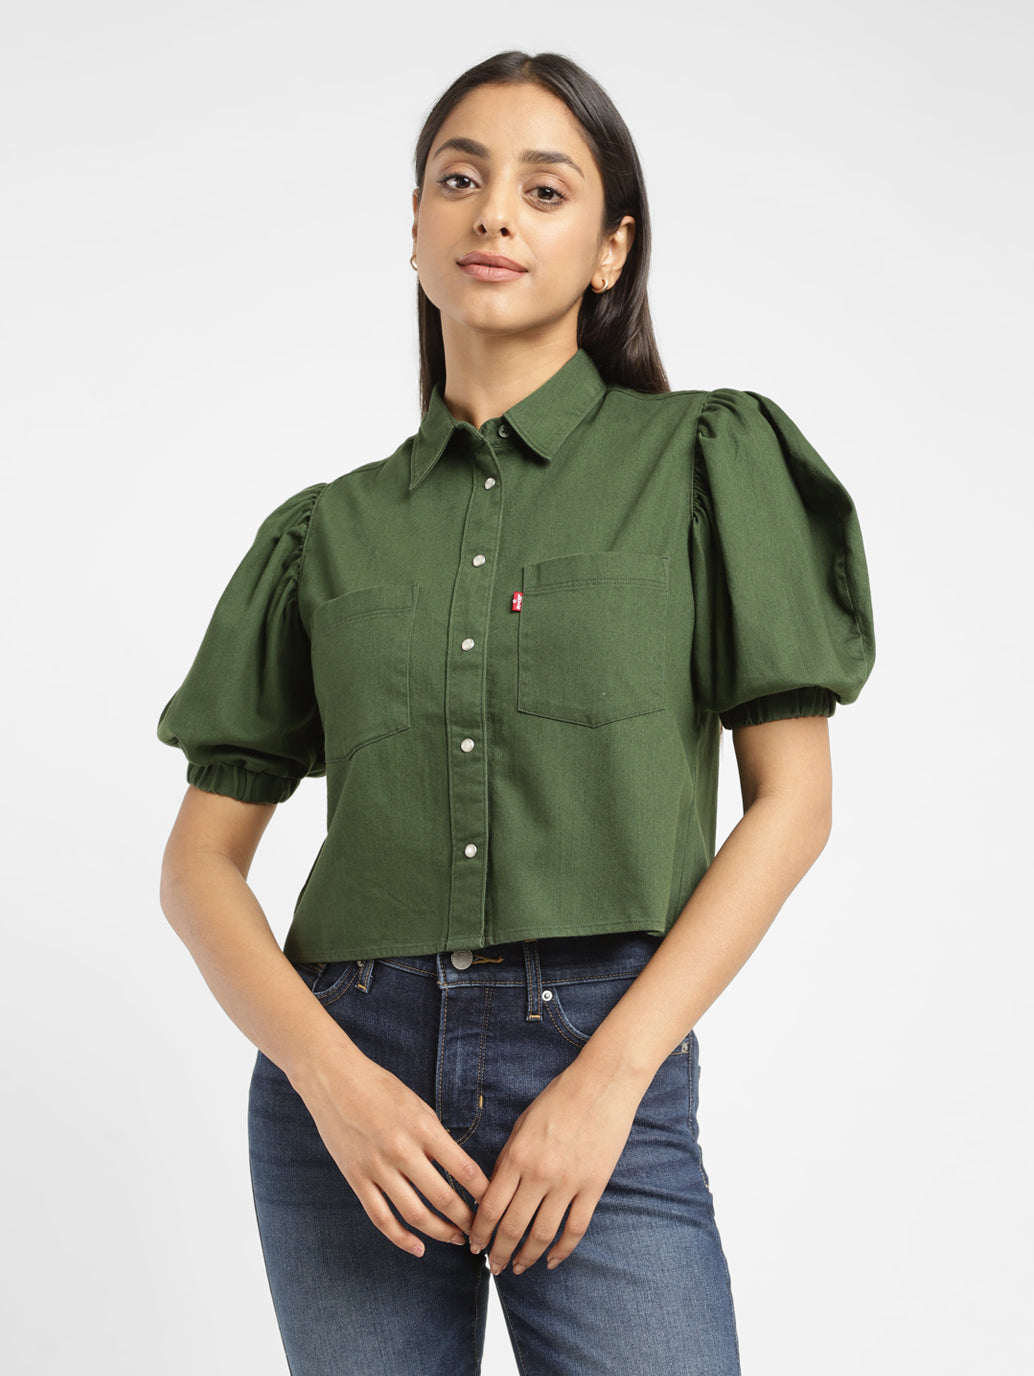 Women's Solid Dark Green Spread Collar Top